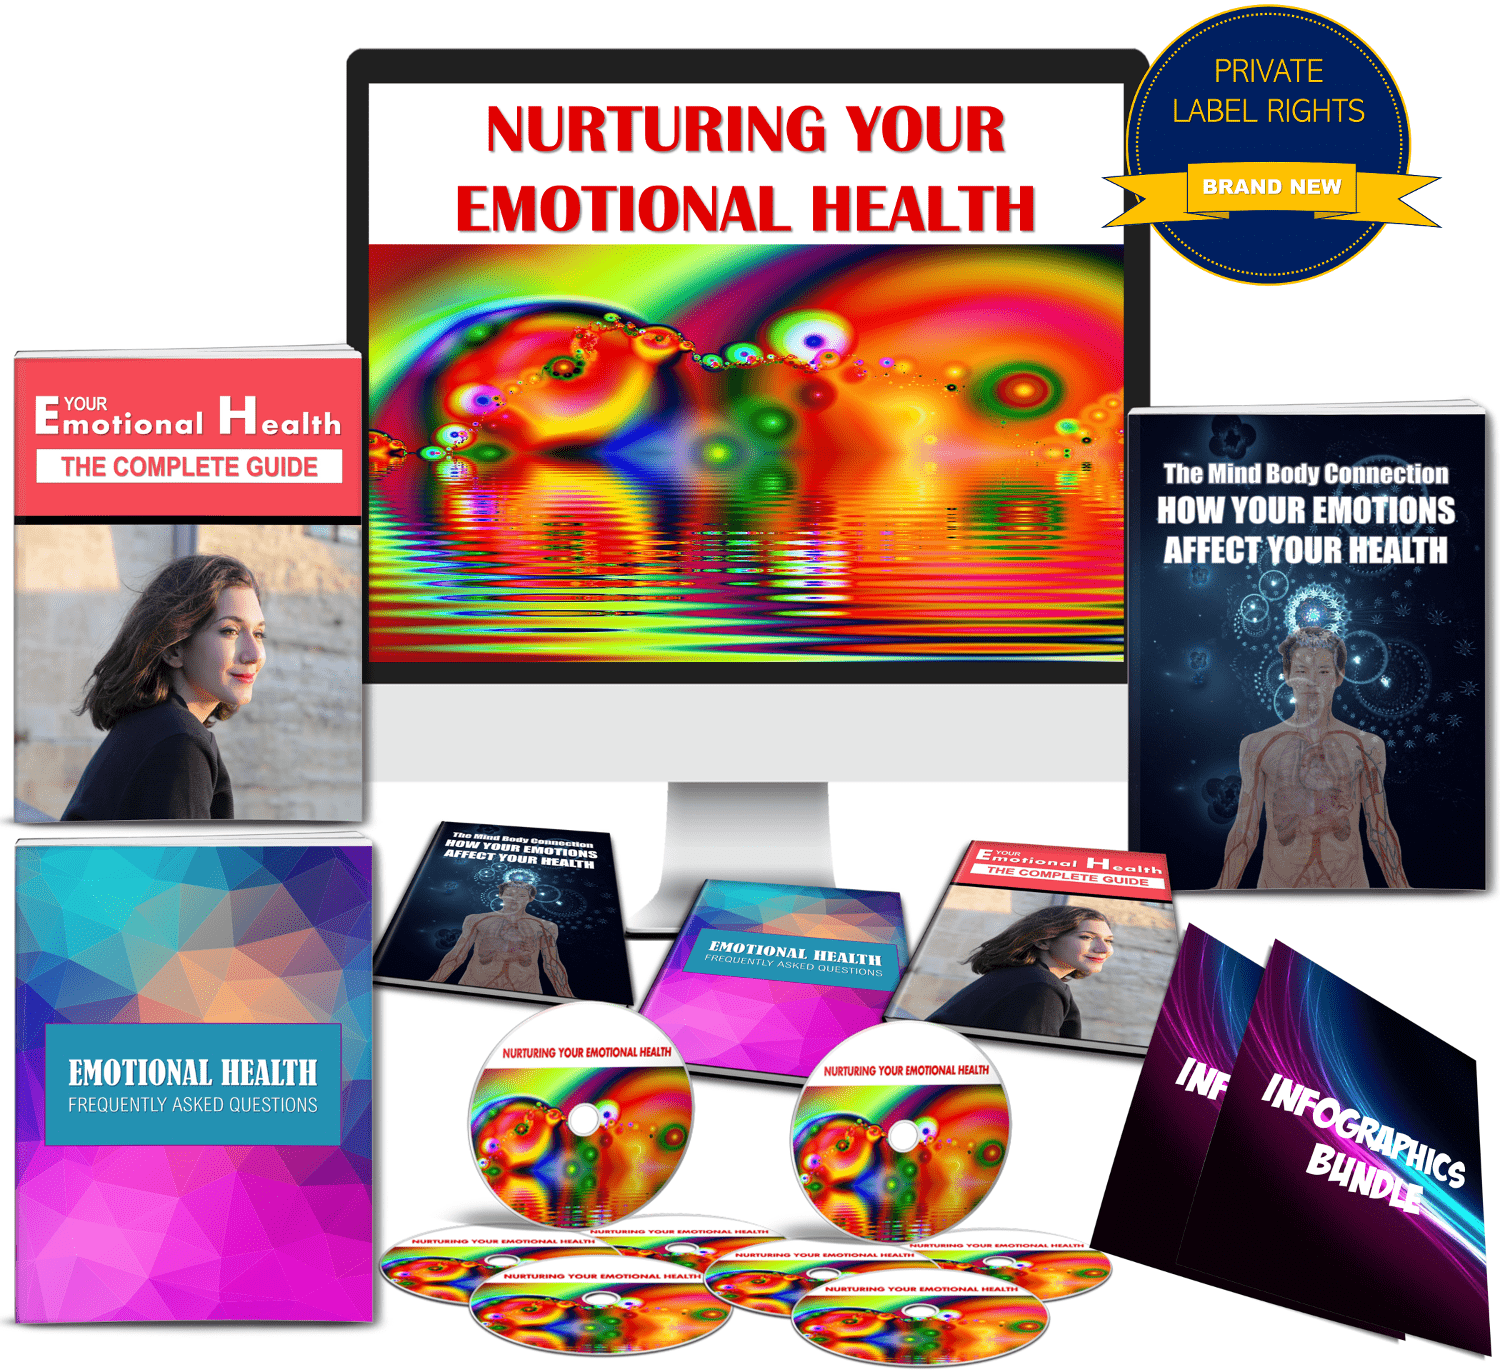 Nurturing Emotional Health Content with PLR Rights